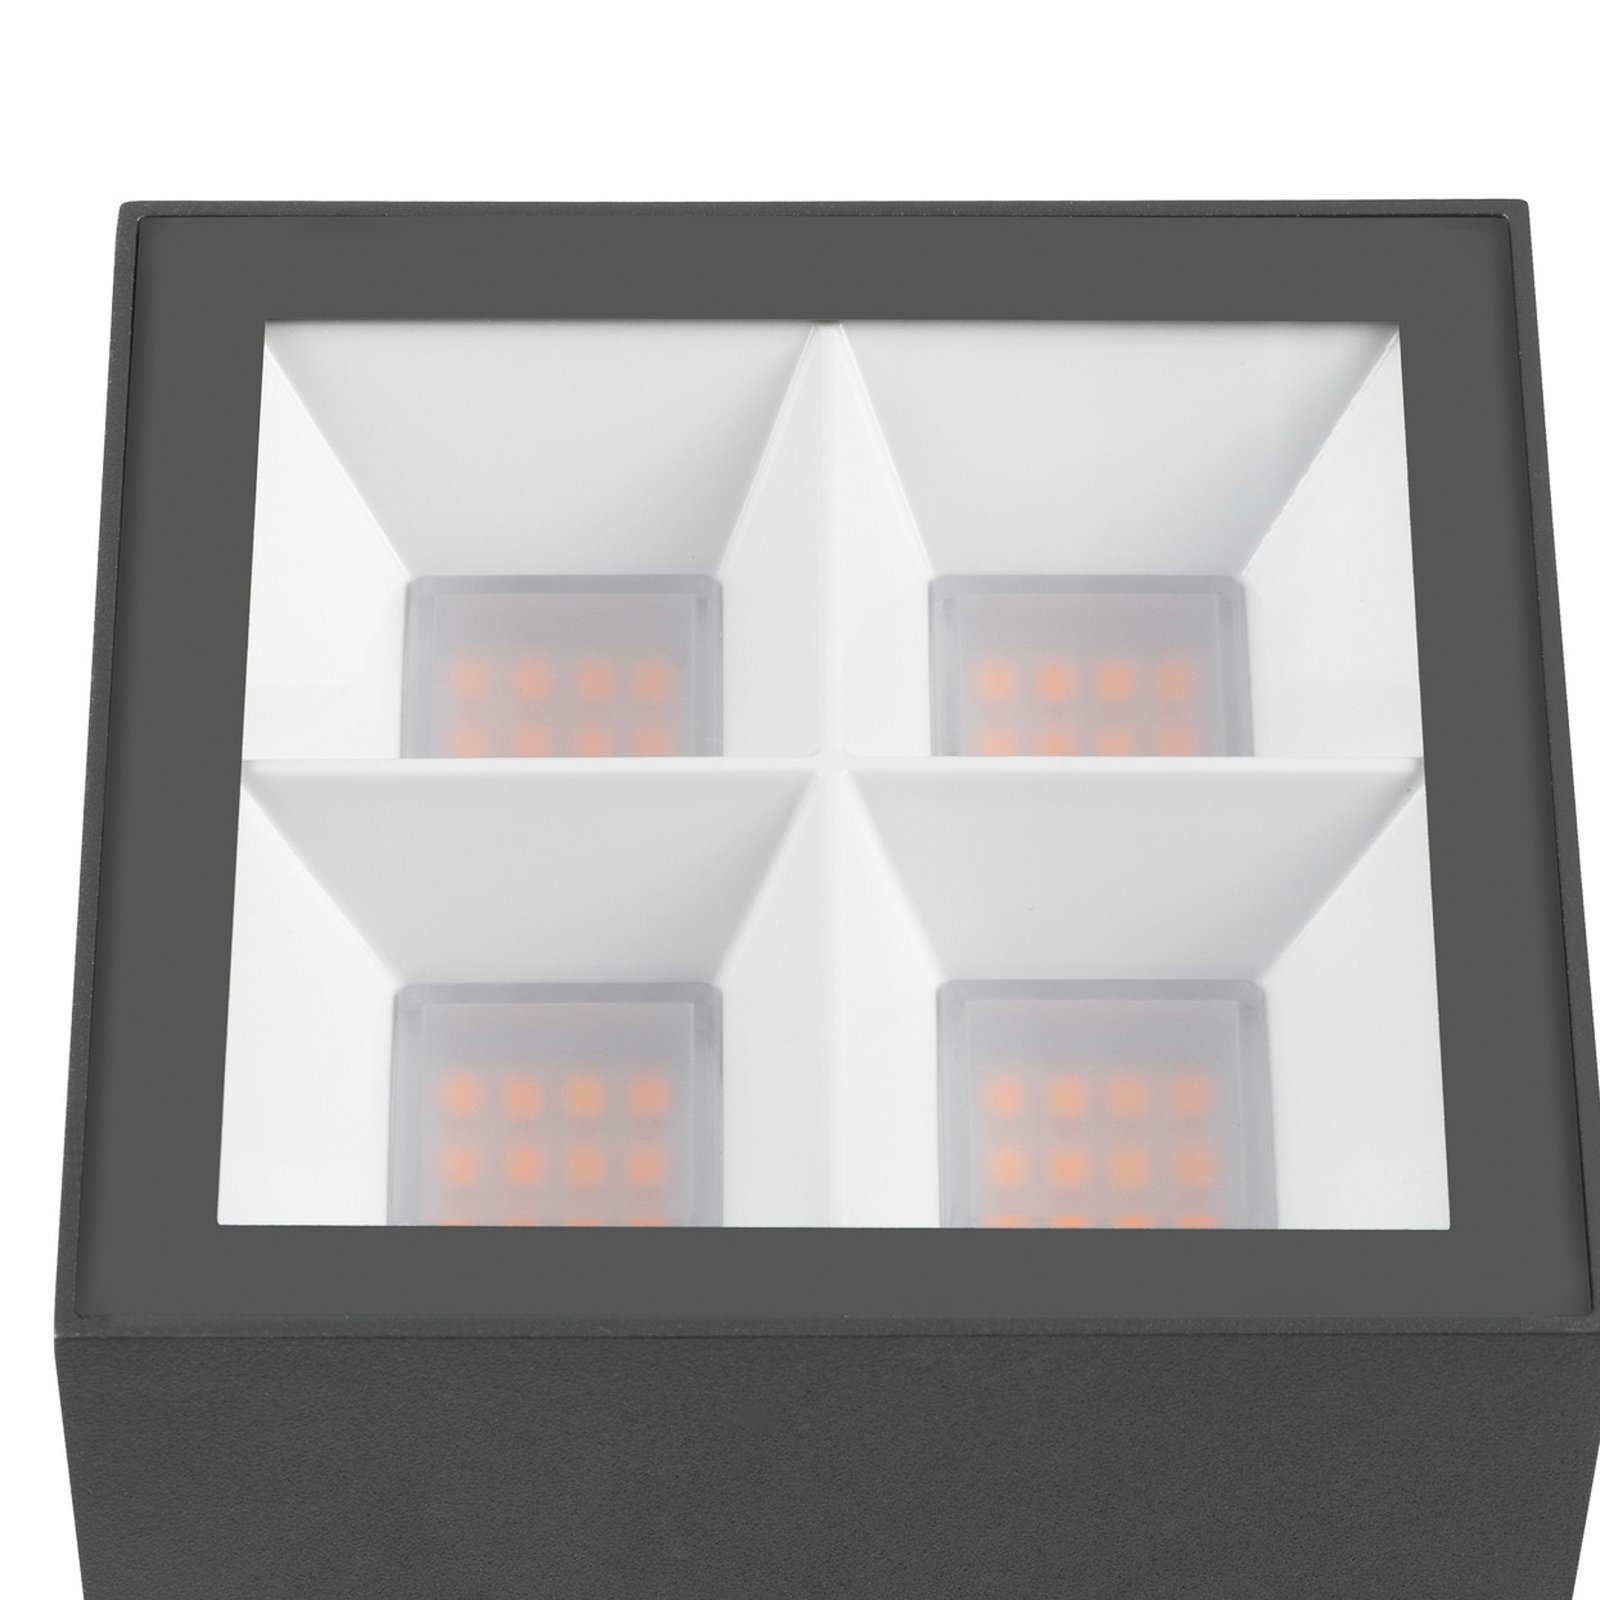 Lampa sufitowa SLV LED S-Cube, antracyt, aluminium, długość 9,5 cm